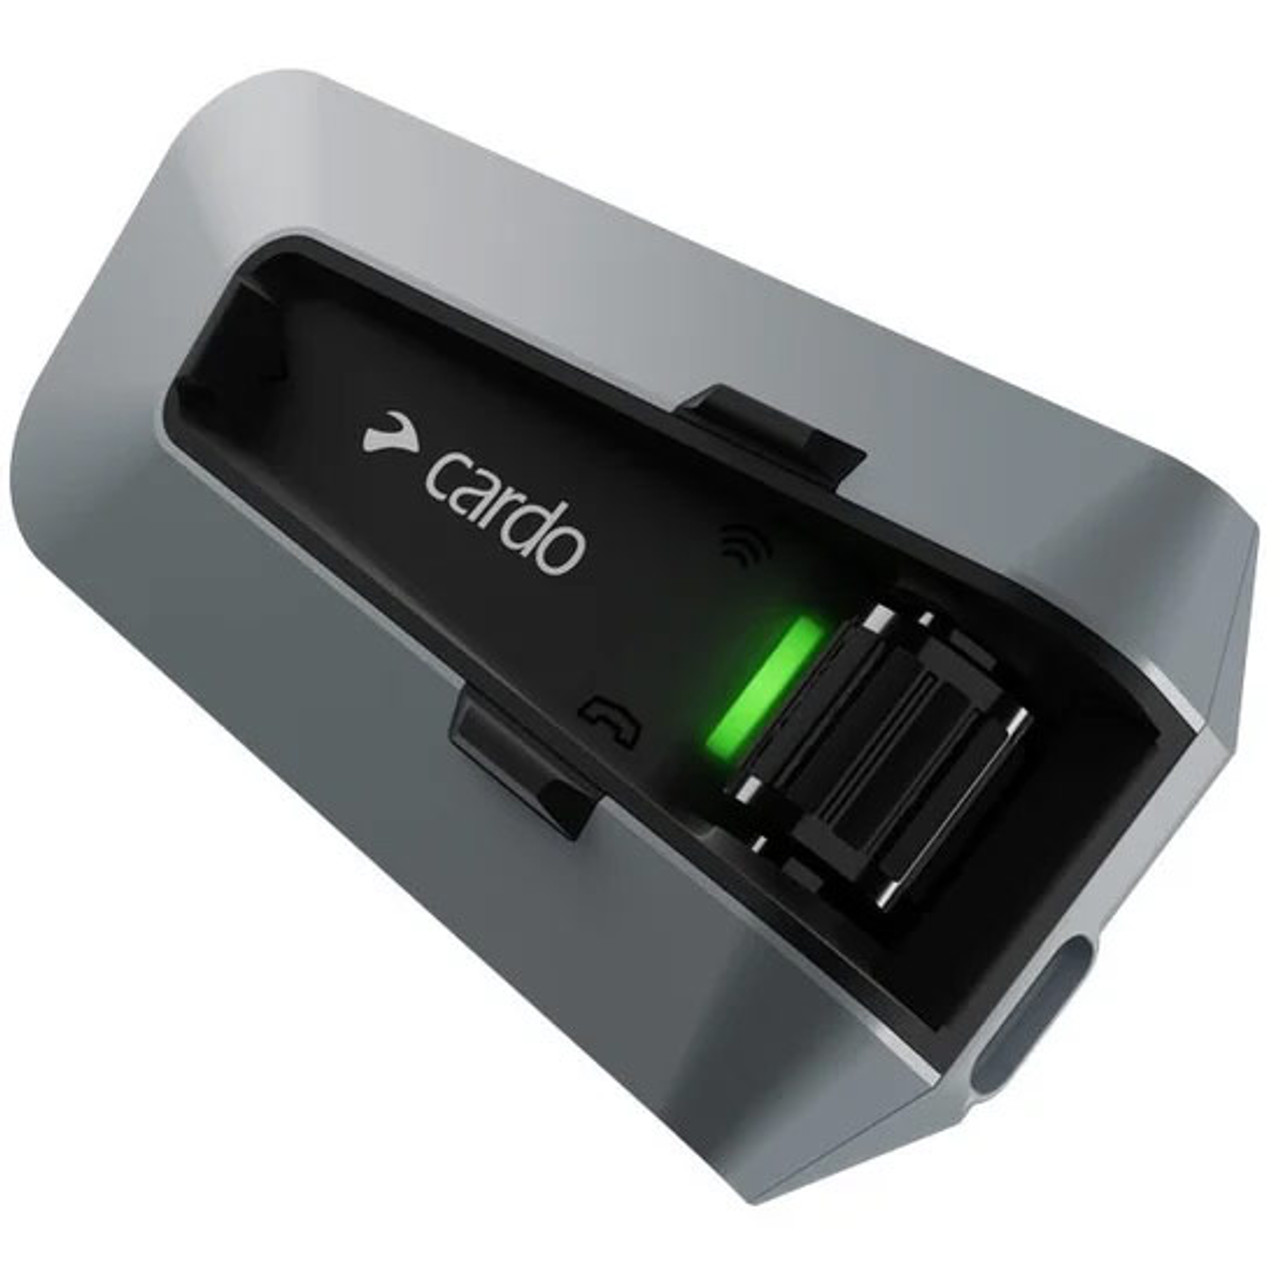 USBC cable - Cardo Systems